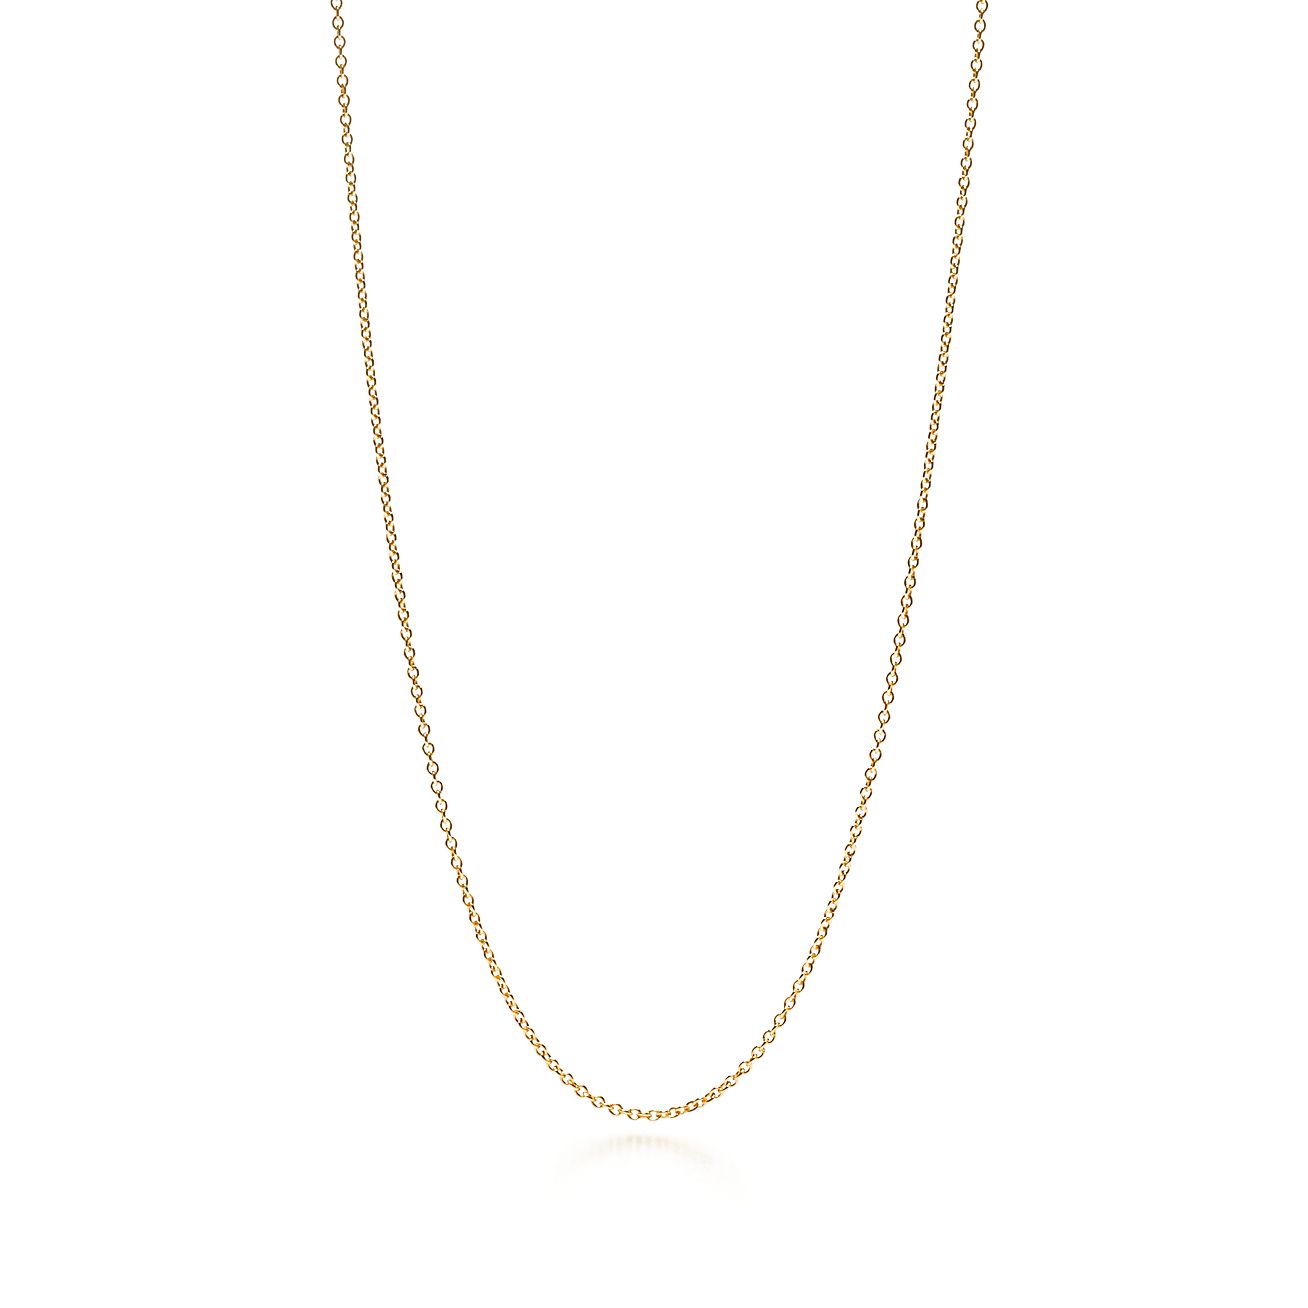 Chain in 18k gold. | Tiffany \u0026 Co.